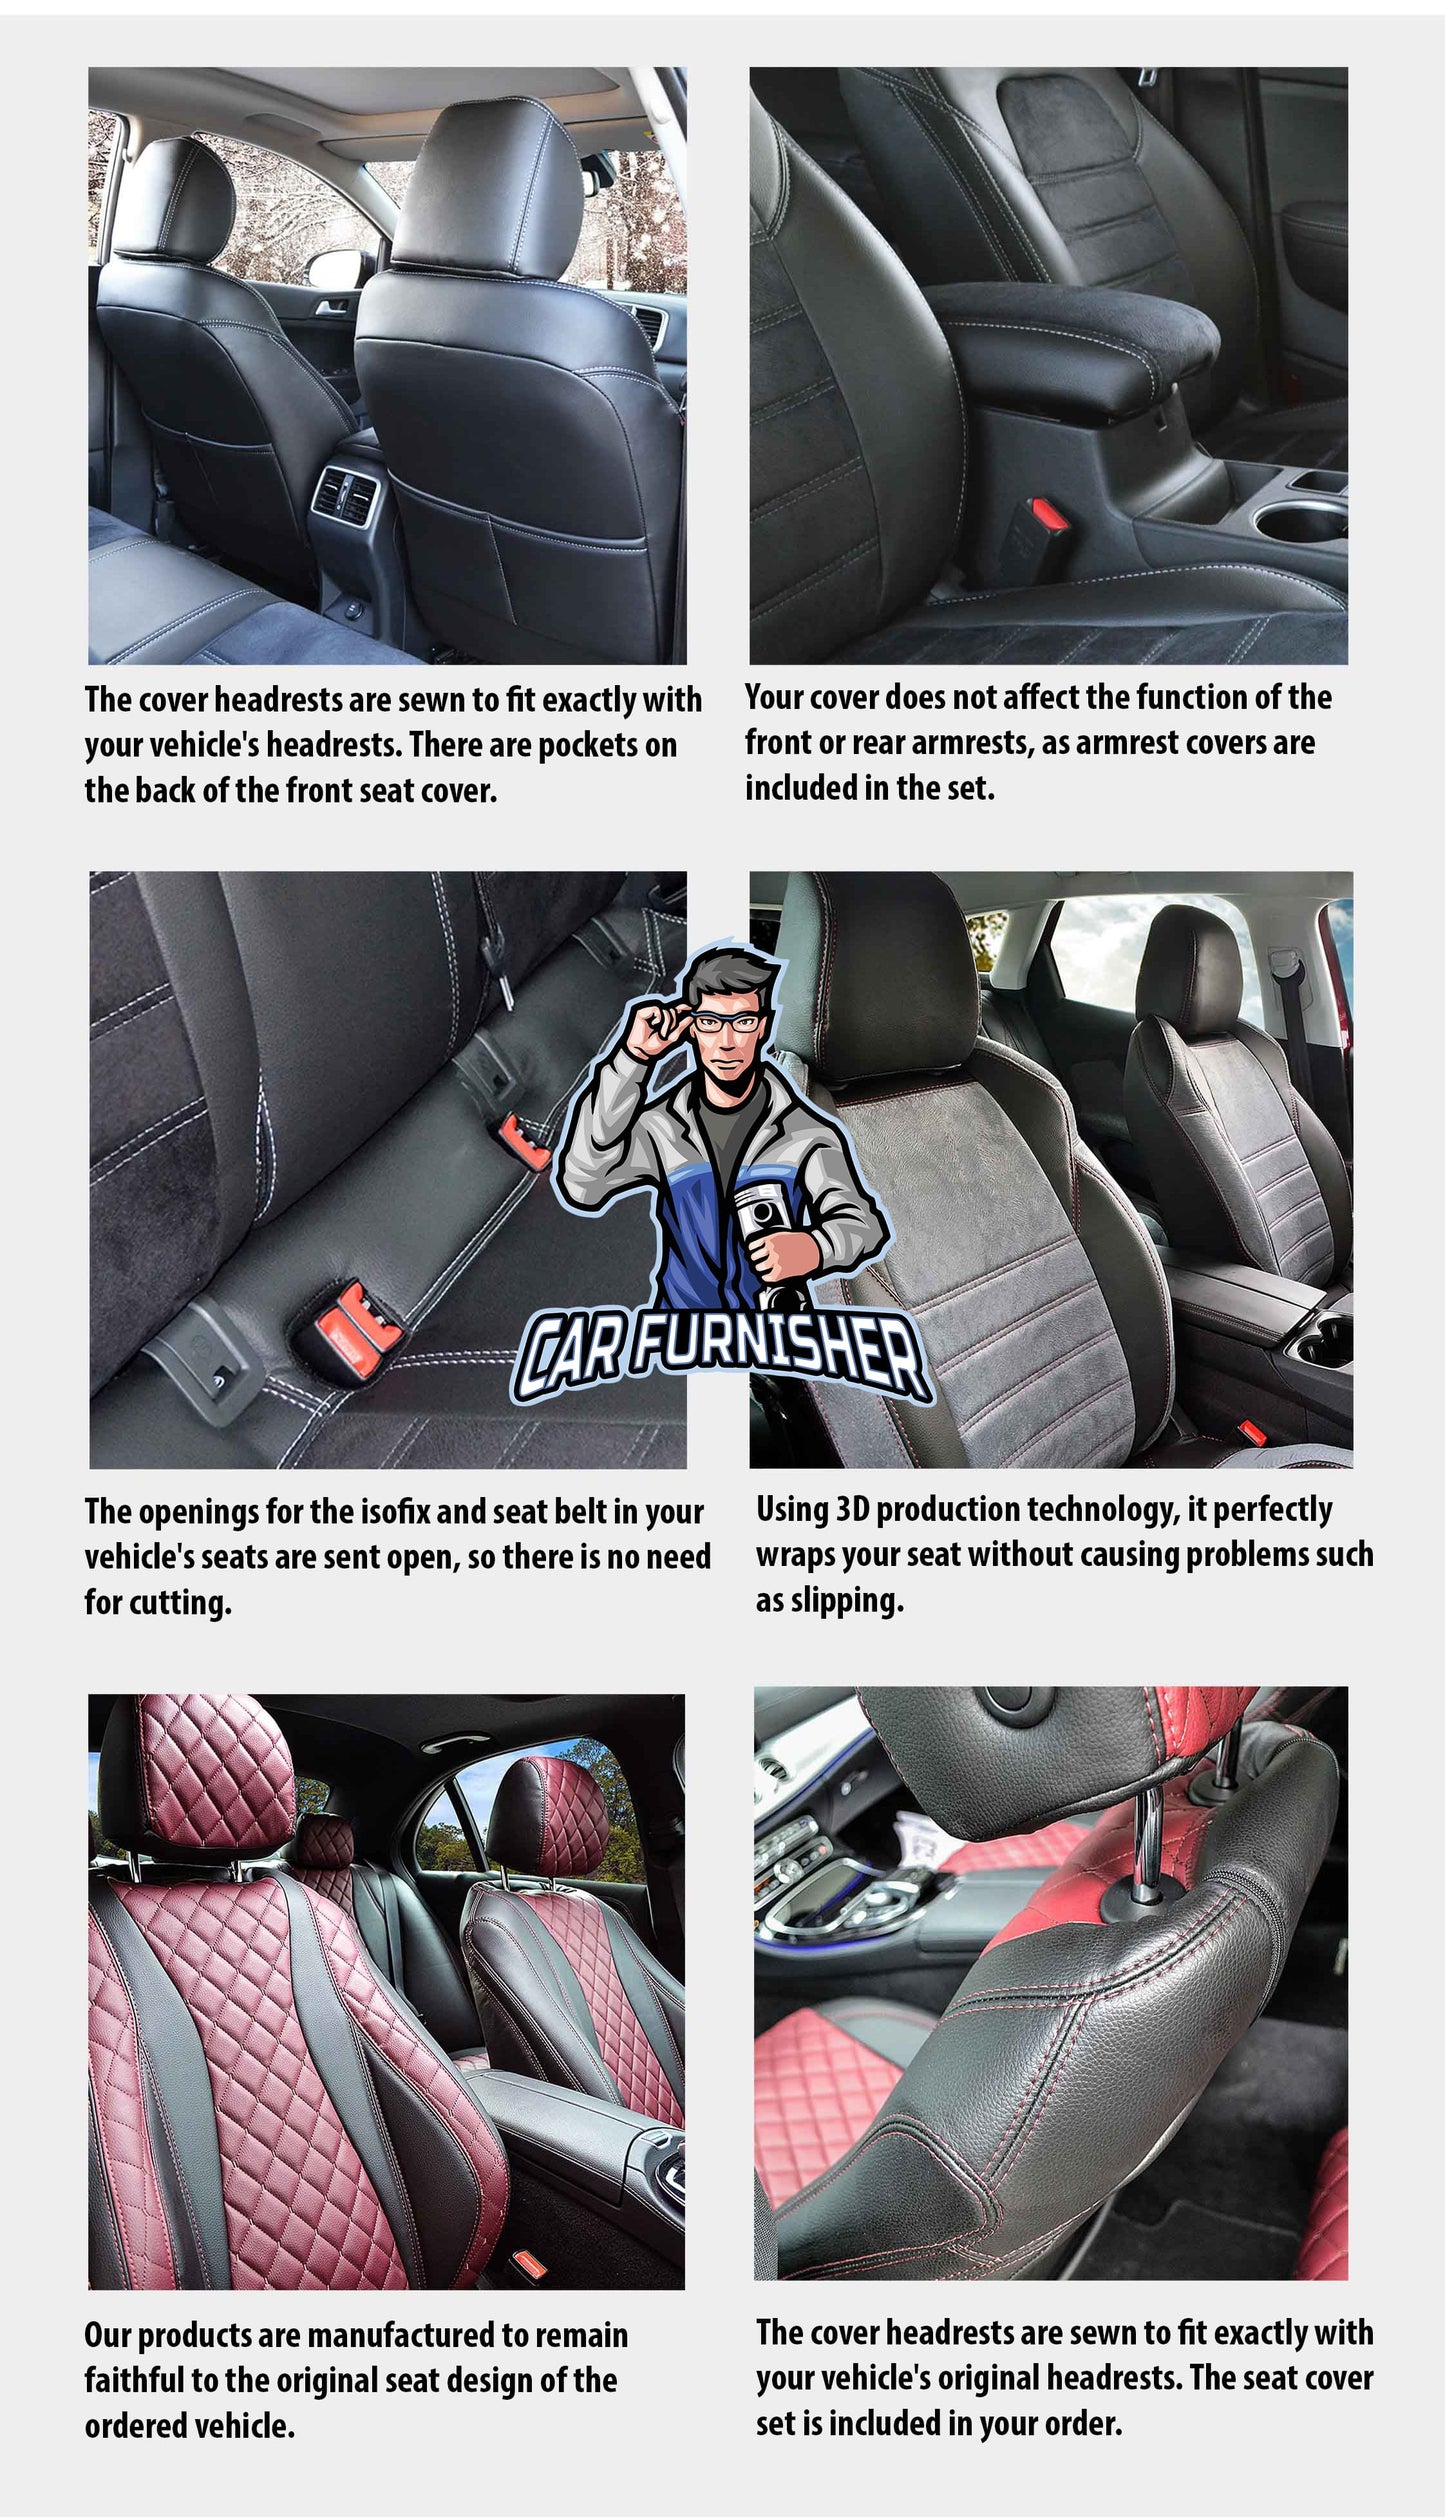 Dacia Sandero Seat Covers Madrid Leather Design Dark Gray Leather